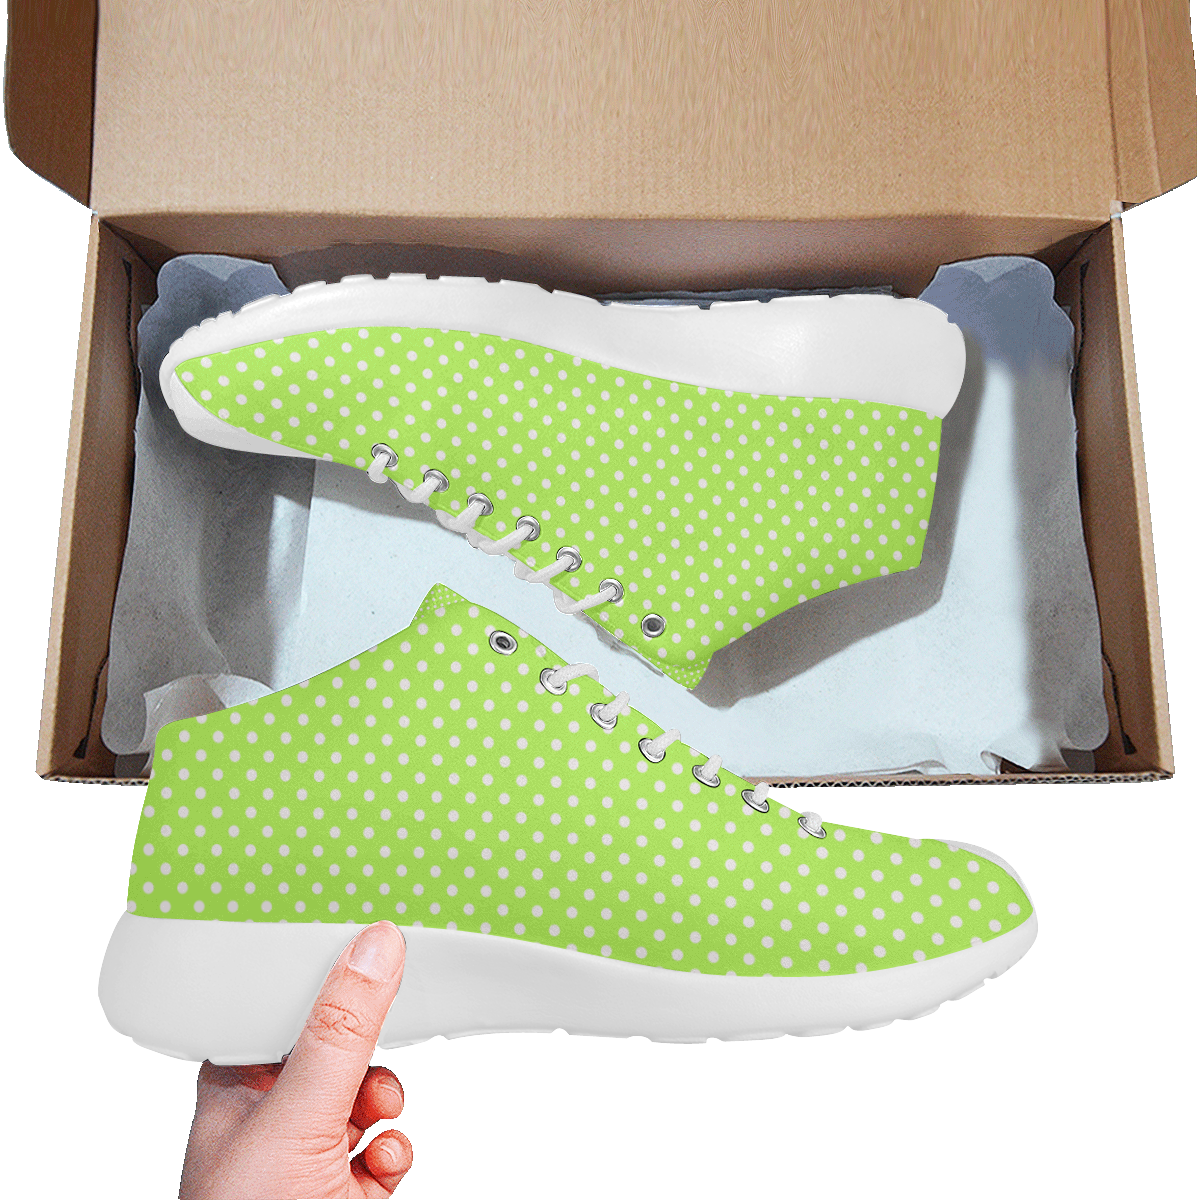 Mint green polka dots Women's Basketball Training Shoes (Model 47502)